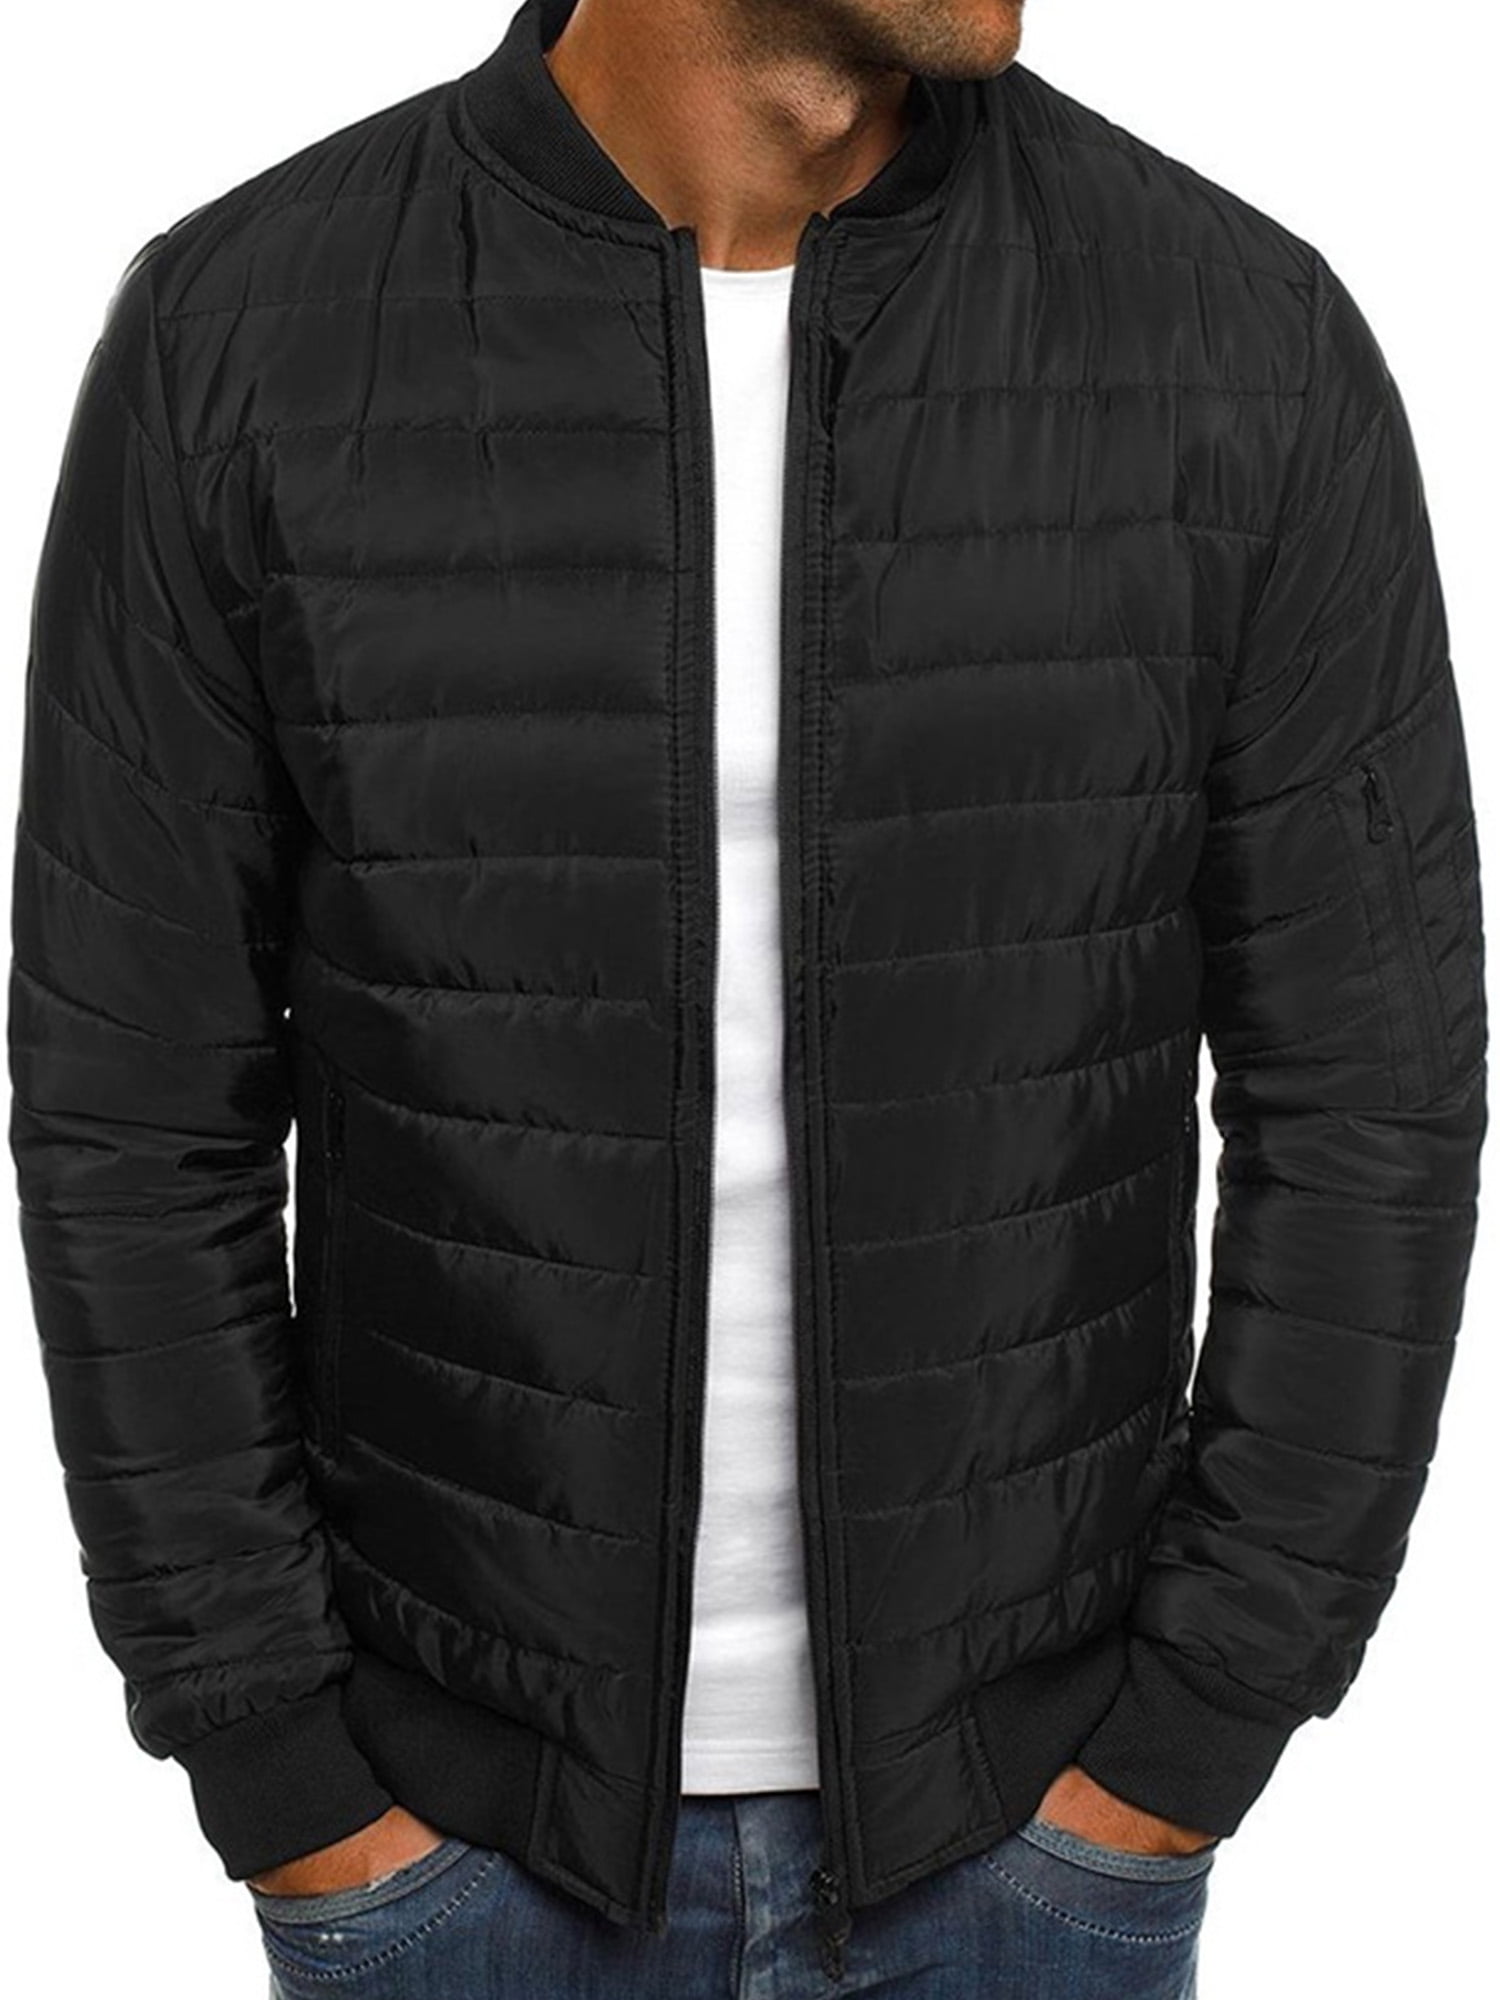 Fubotevic Mens Slim Lightweight Full-Zip Warm Winter Down Quilted Jacket Coat